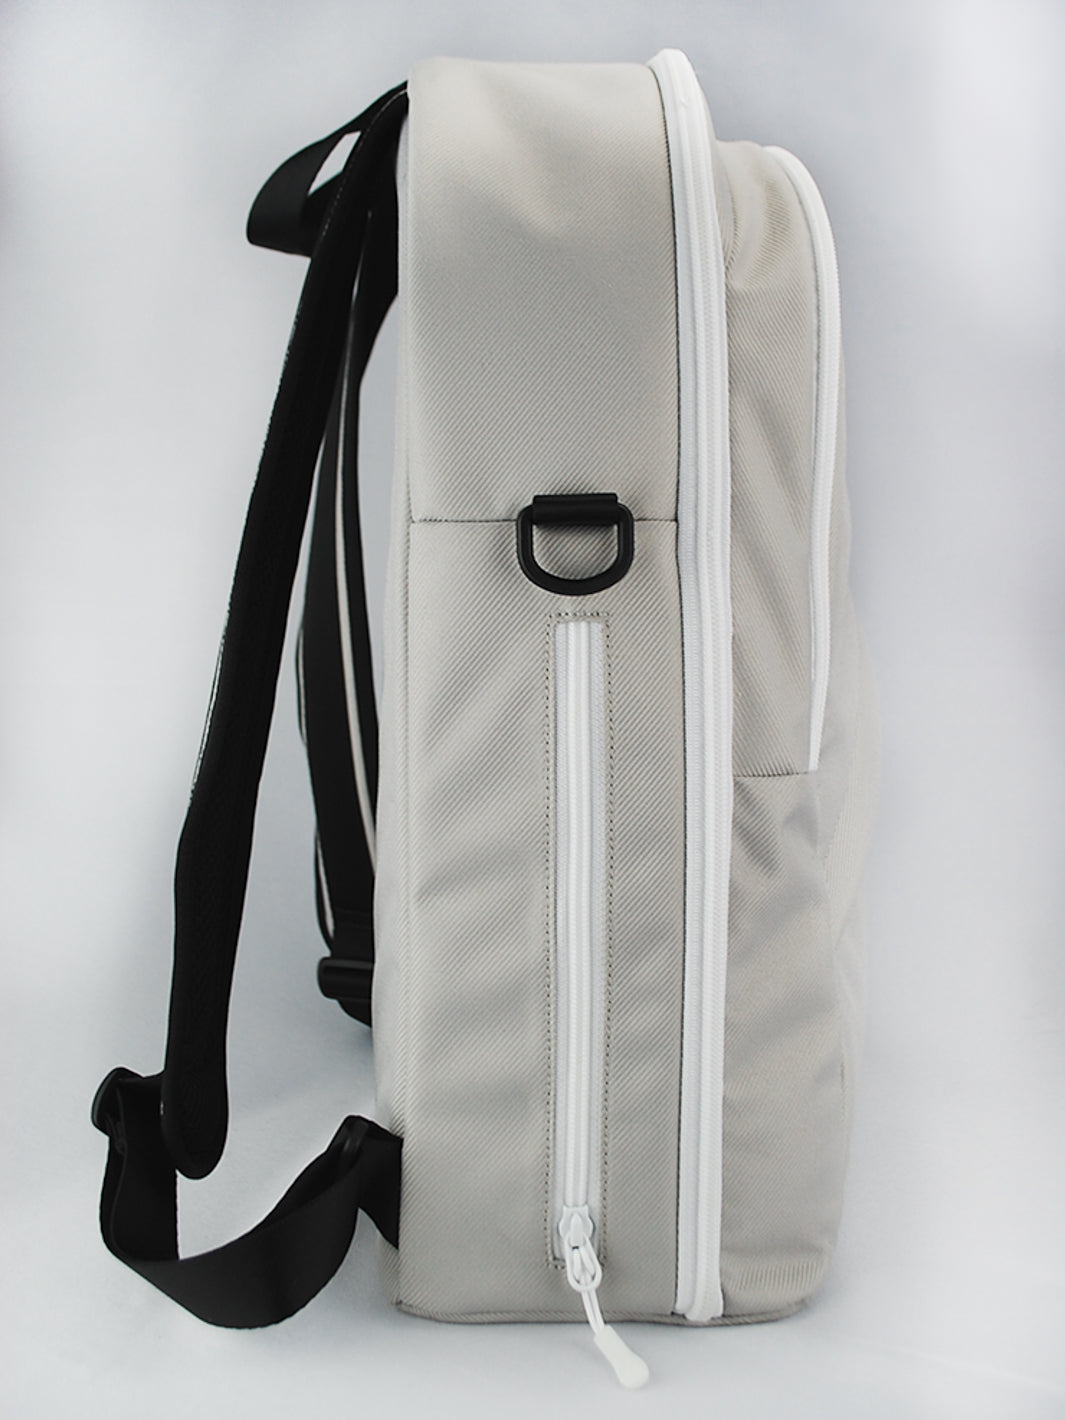 Fluid Motion Backpack: Best Backpack for Diabetics